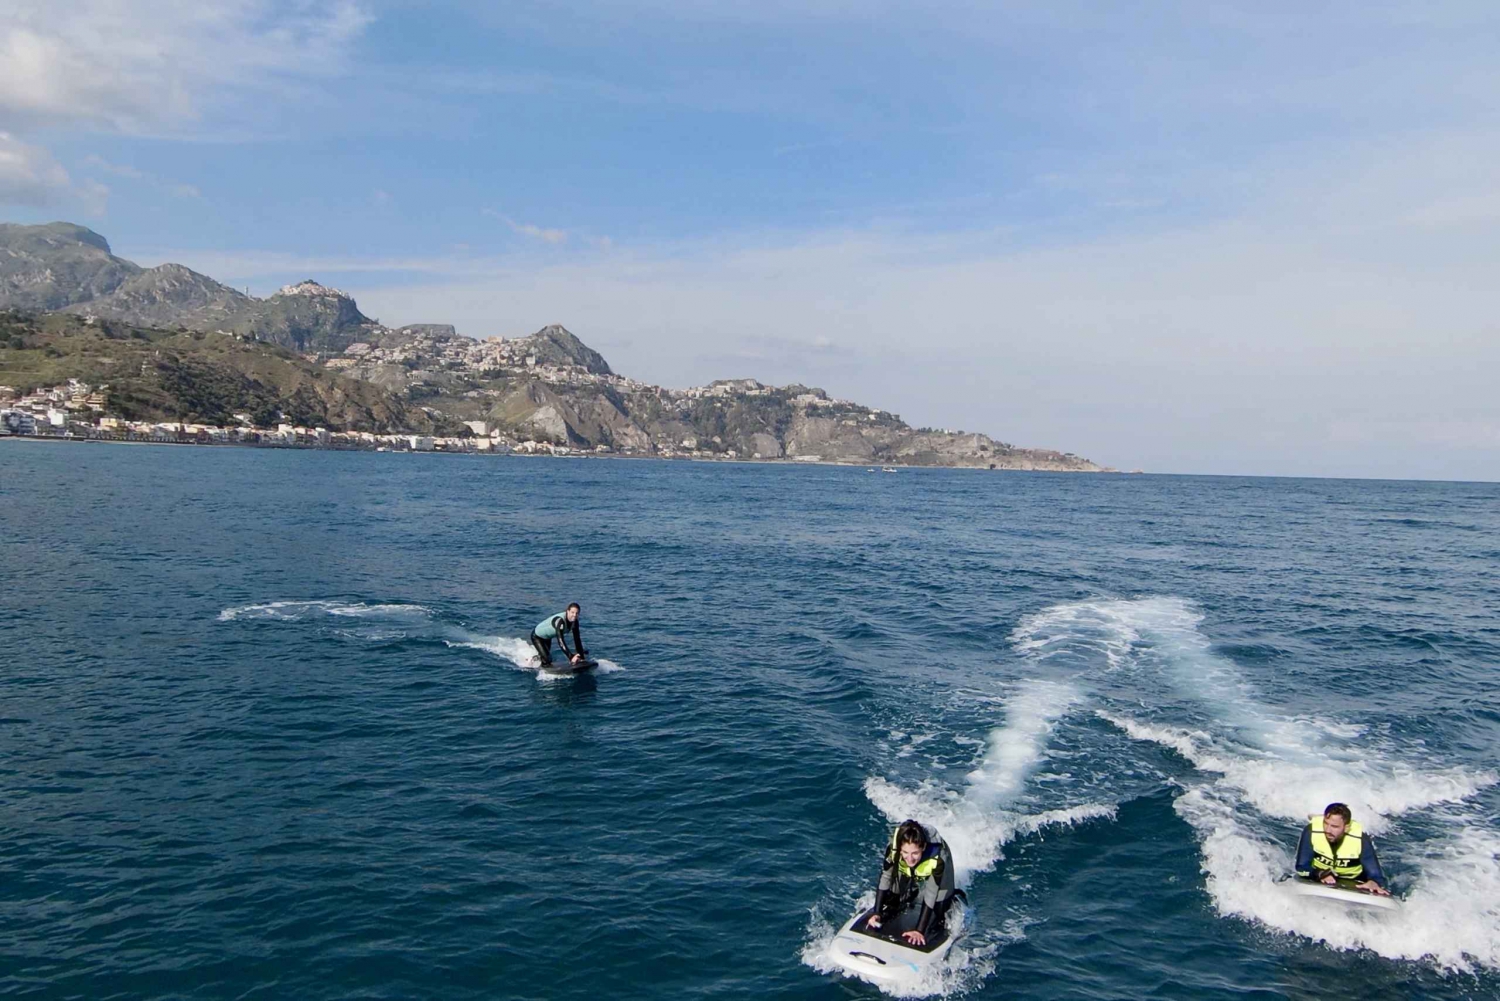 Taormina - Giardini Naxos jetsurfing with instructor